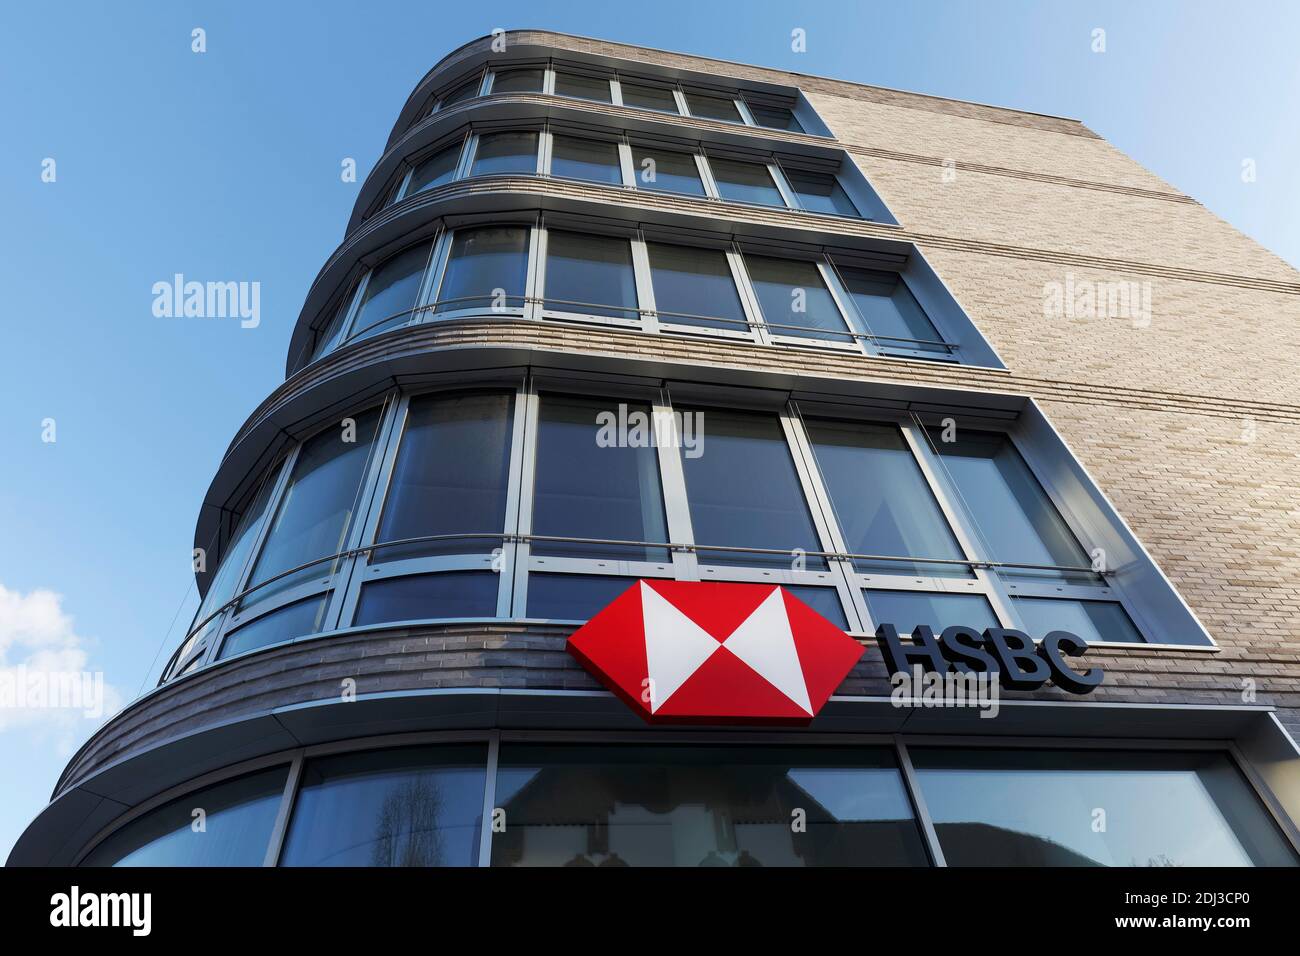 HSBC Bank, logo at the German headquarters, Duesseldorf, North Rhine-Westphalia, Germany Stock Photo